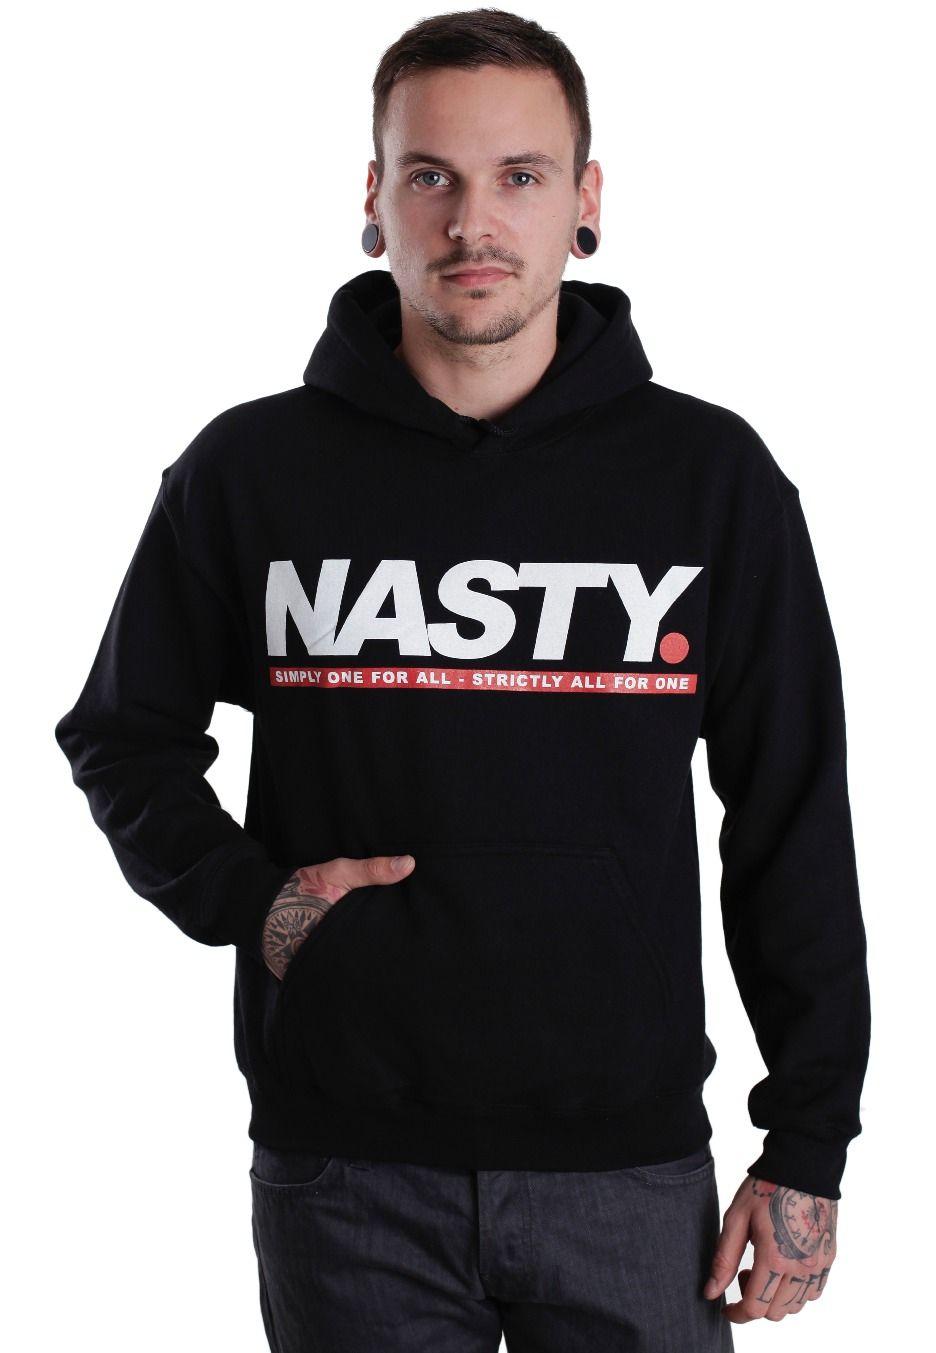 Got Love Logo - Nasty - Got Love - Hoodie - Official Beatdown Merchandise Shop ...